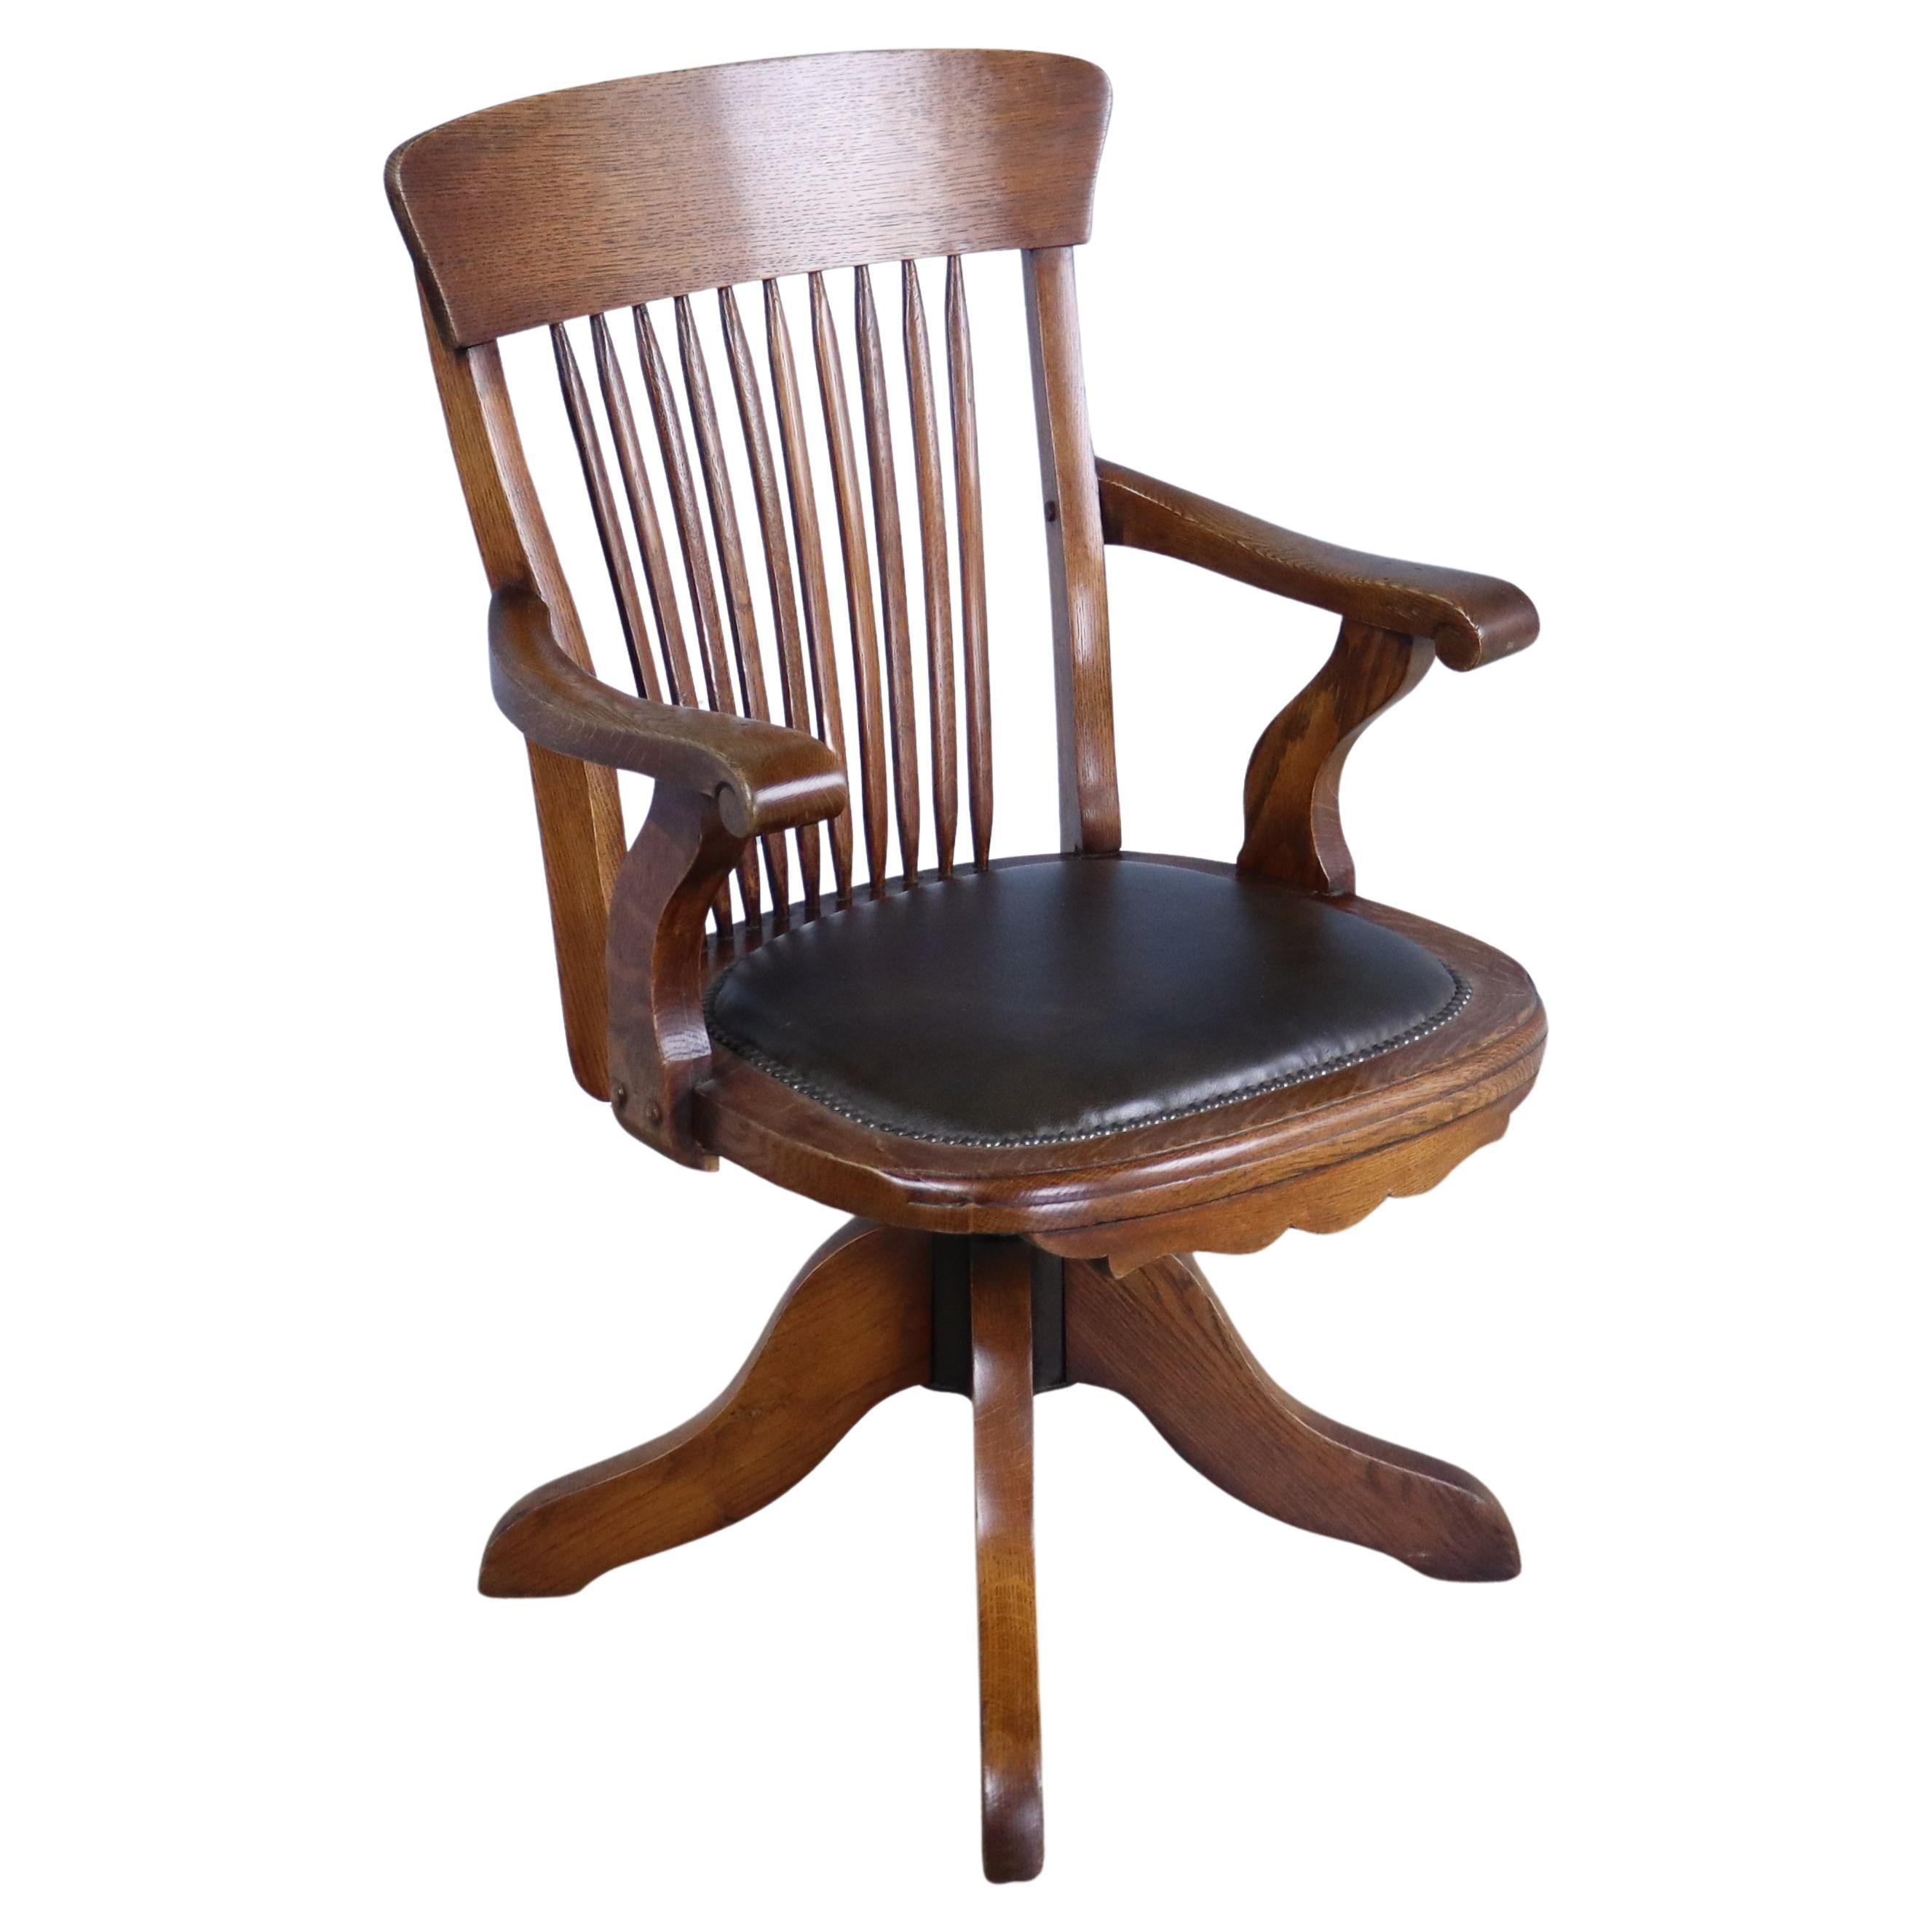 Early 20th Century Oak Swivel Desk Chair, Adjustable Height